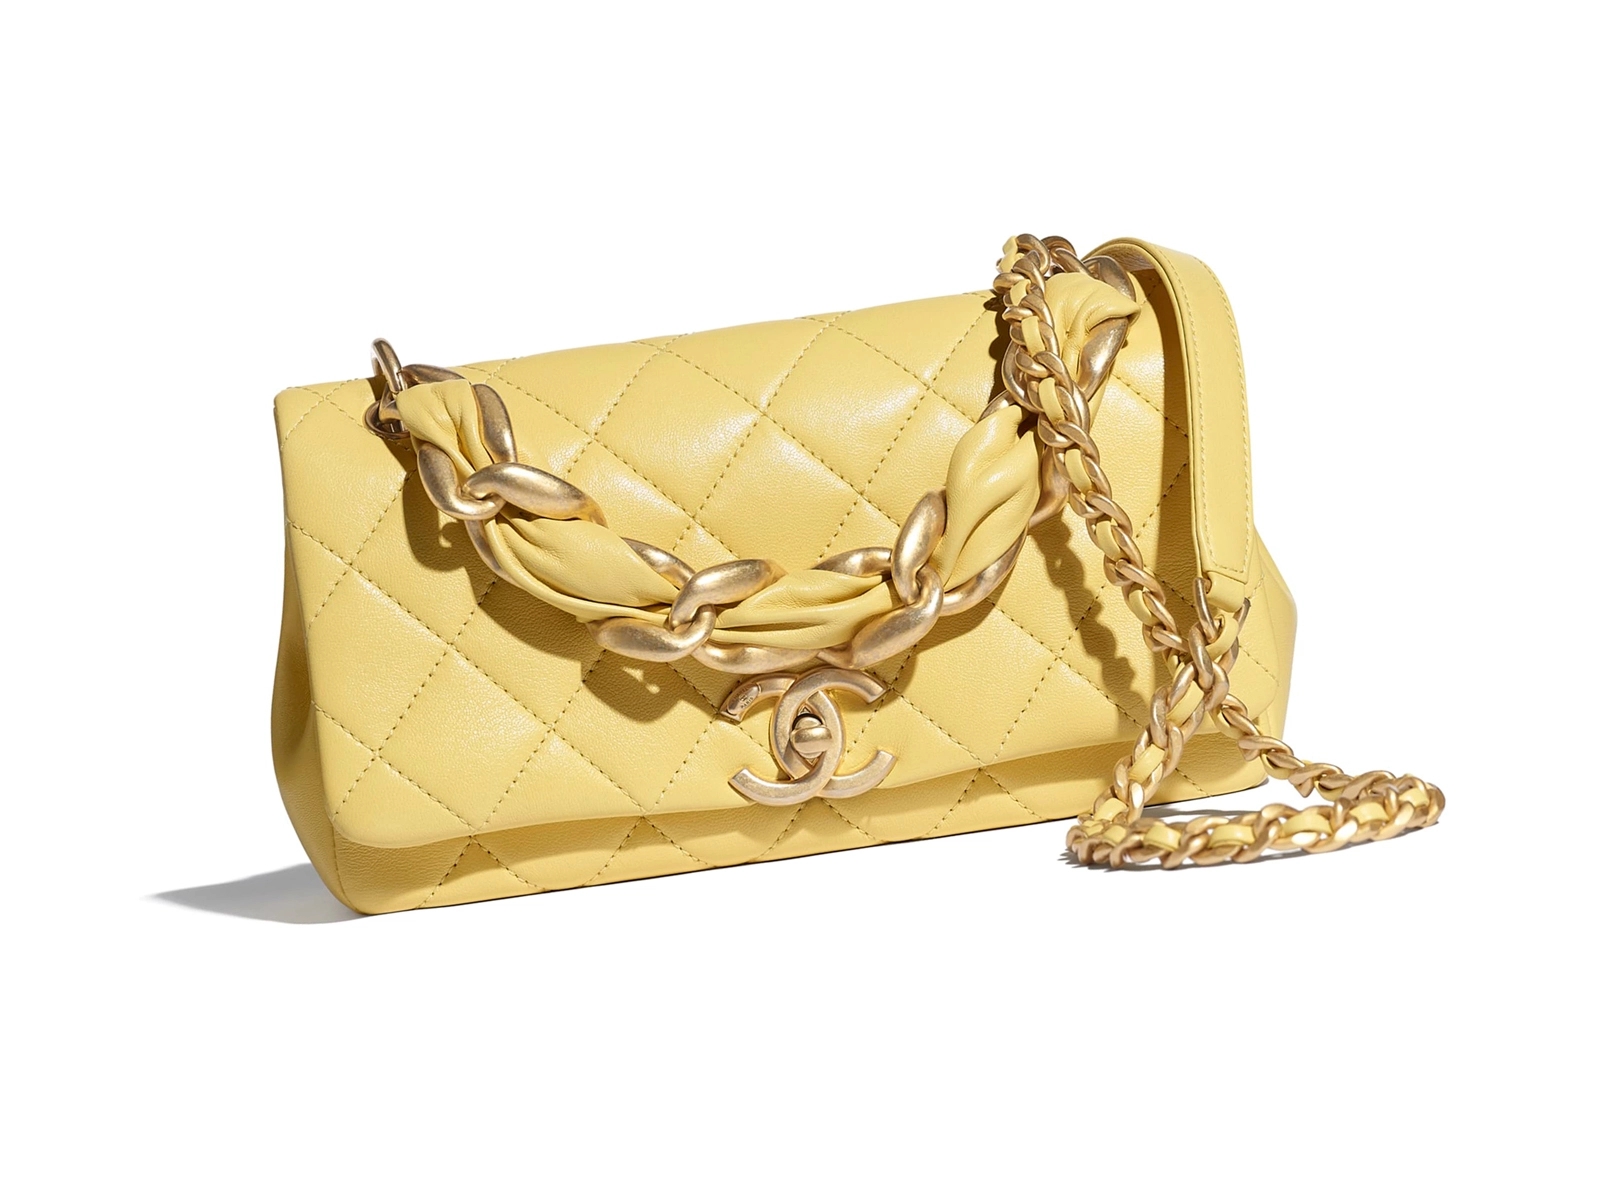 Chanel-Buttery-Yellow-Bag.jpg.webp